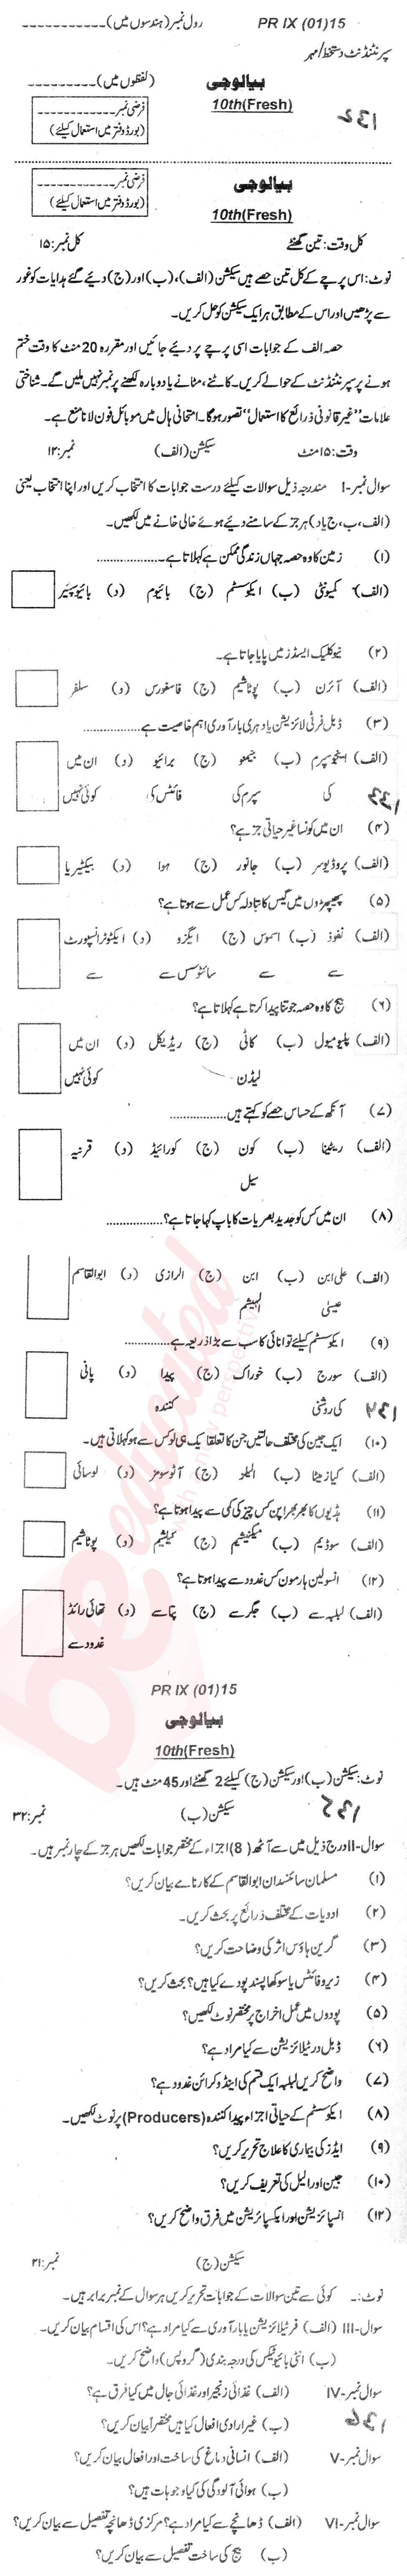 Biology 10th Urdu Medium Past Paper Group 1 BISE Mardan 2015